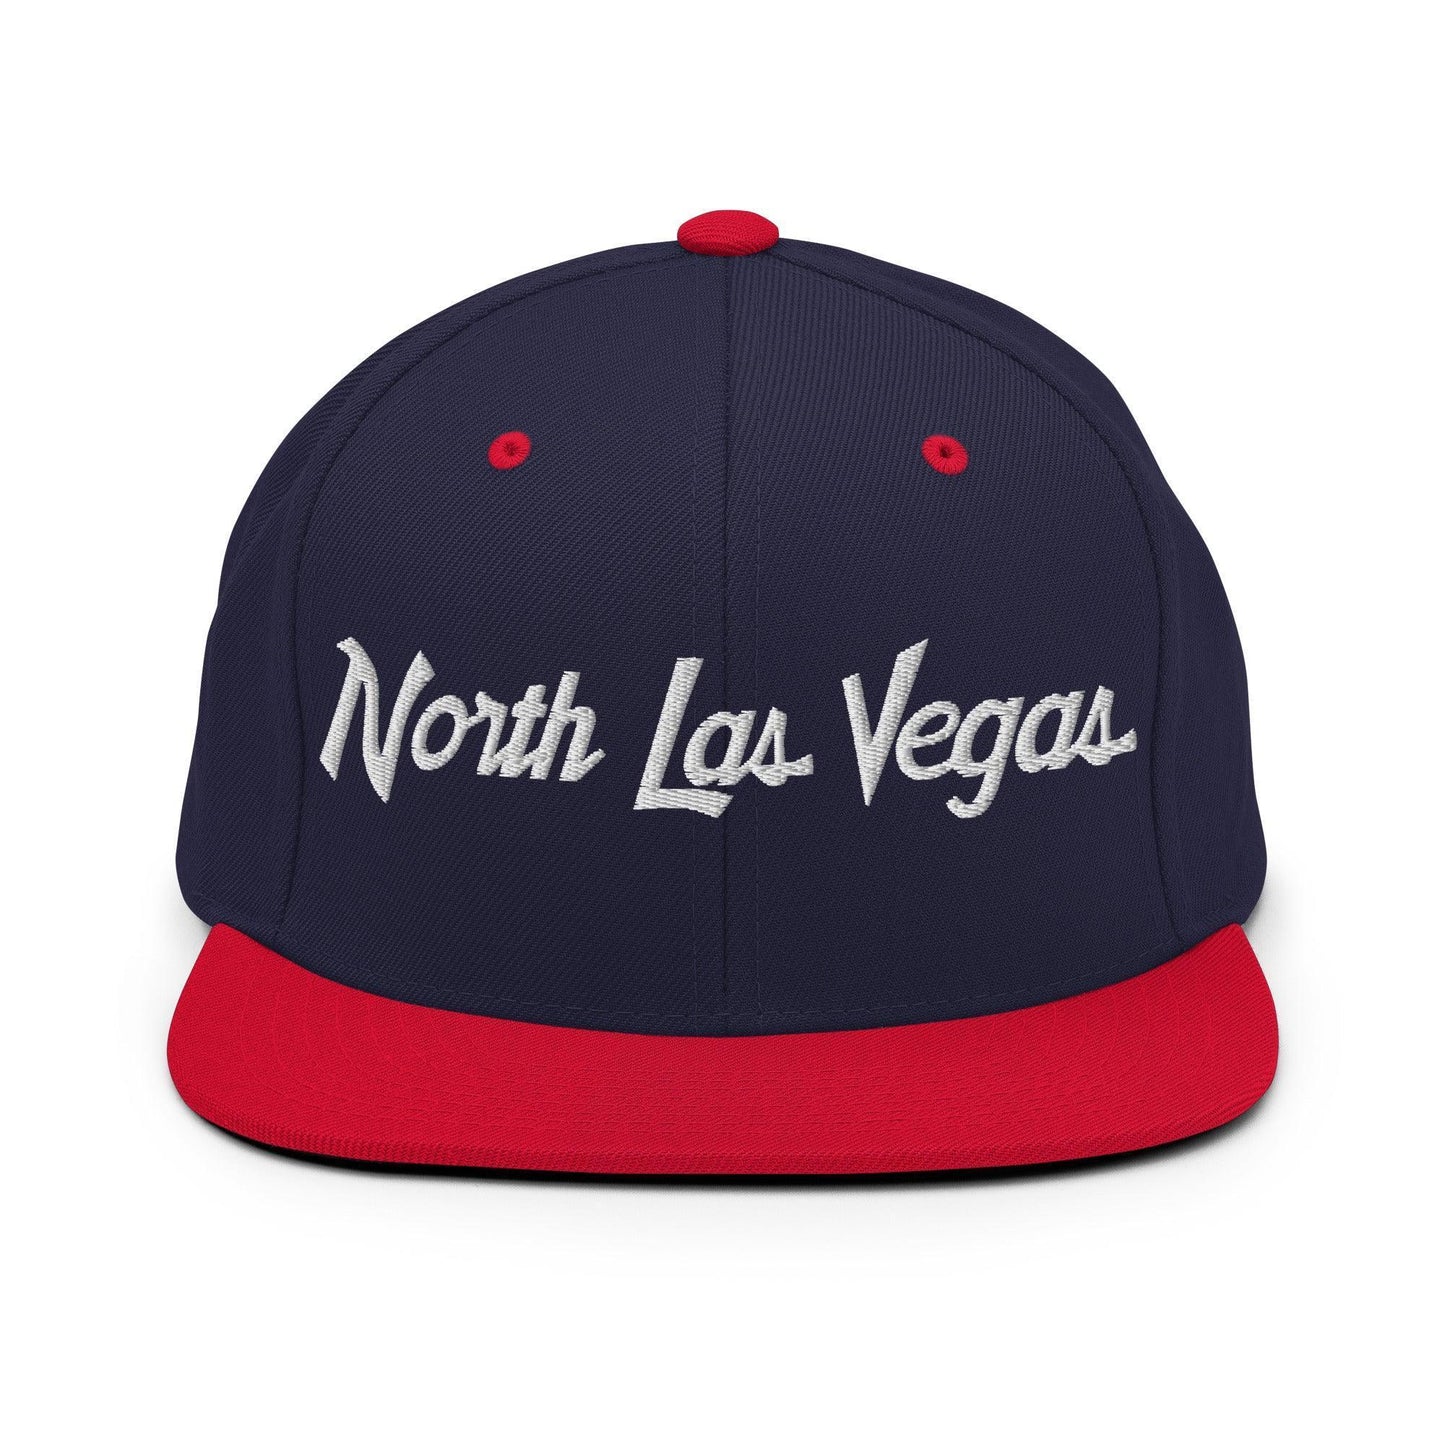 North Las Vegas Script Snapback Hat Navy/ Red